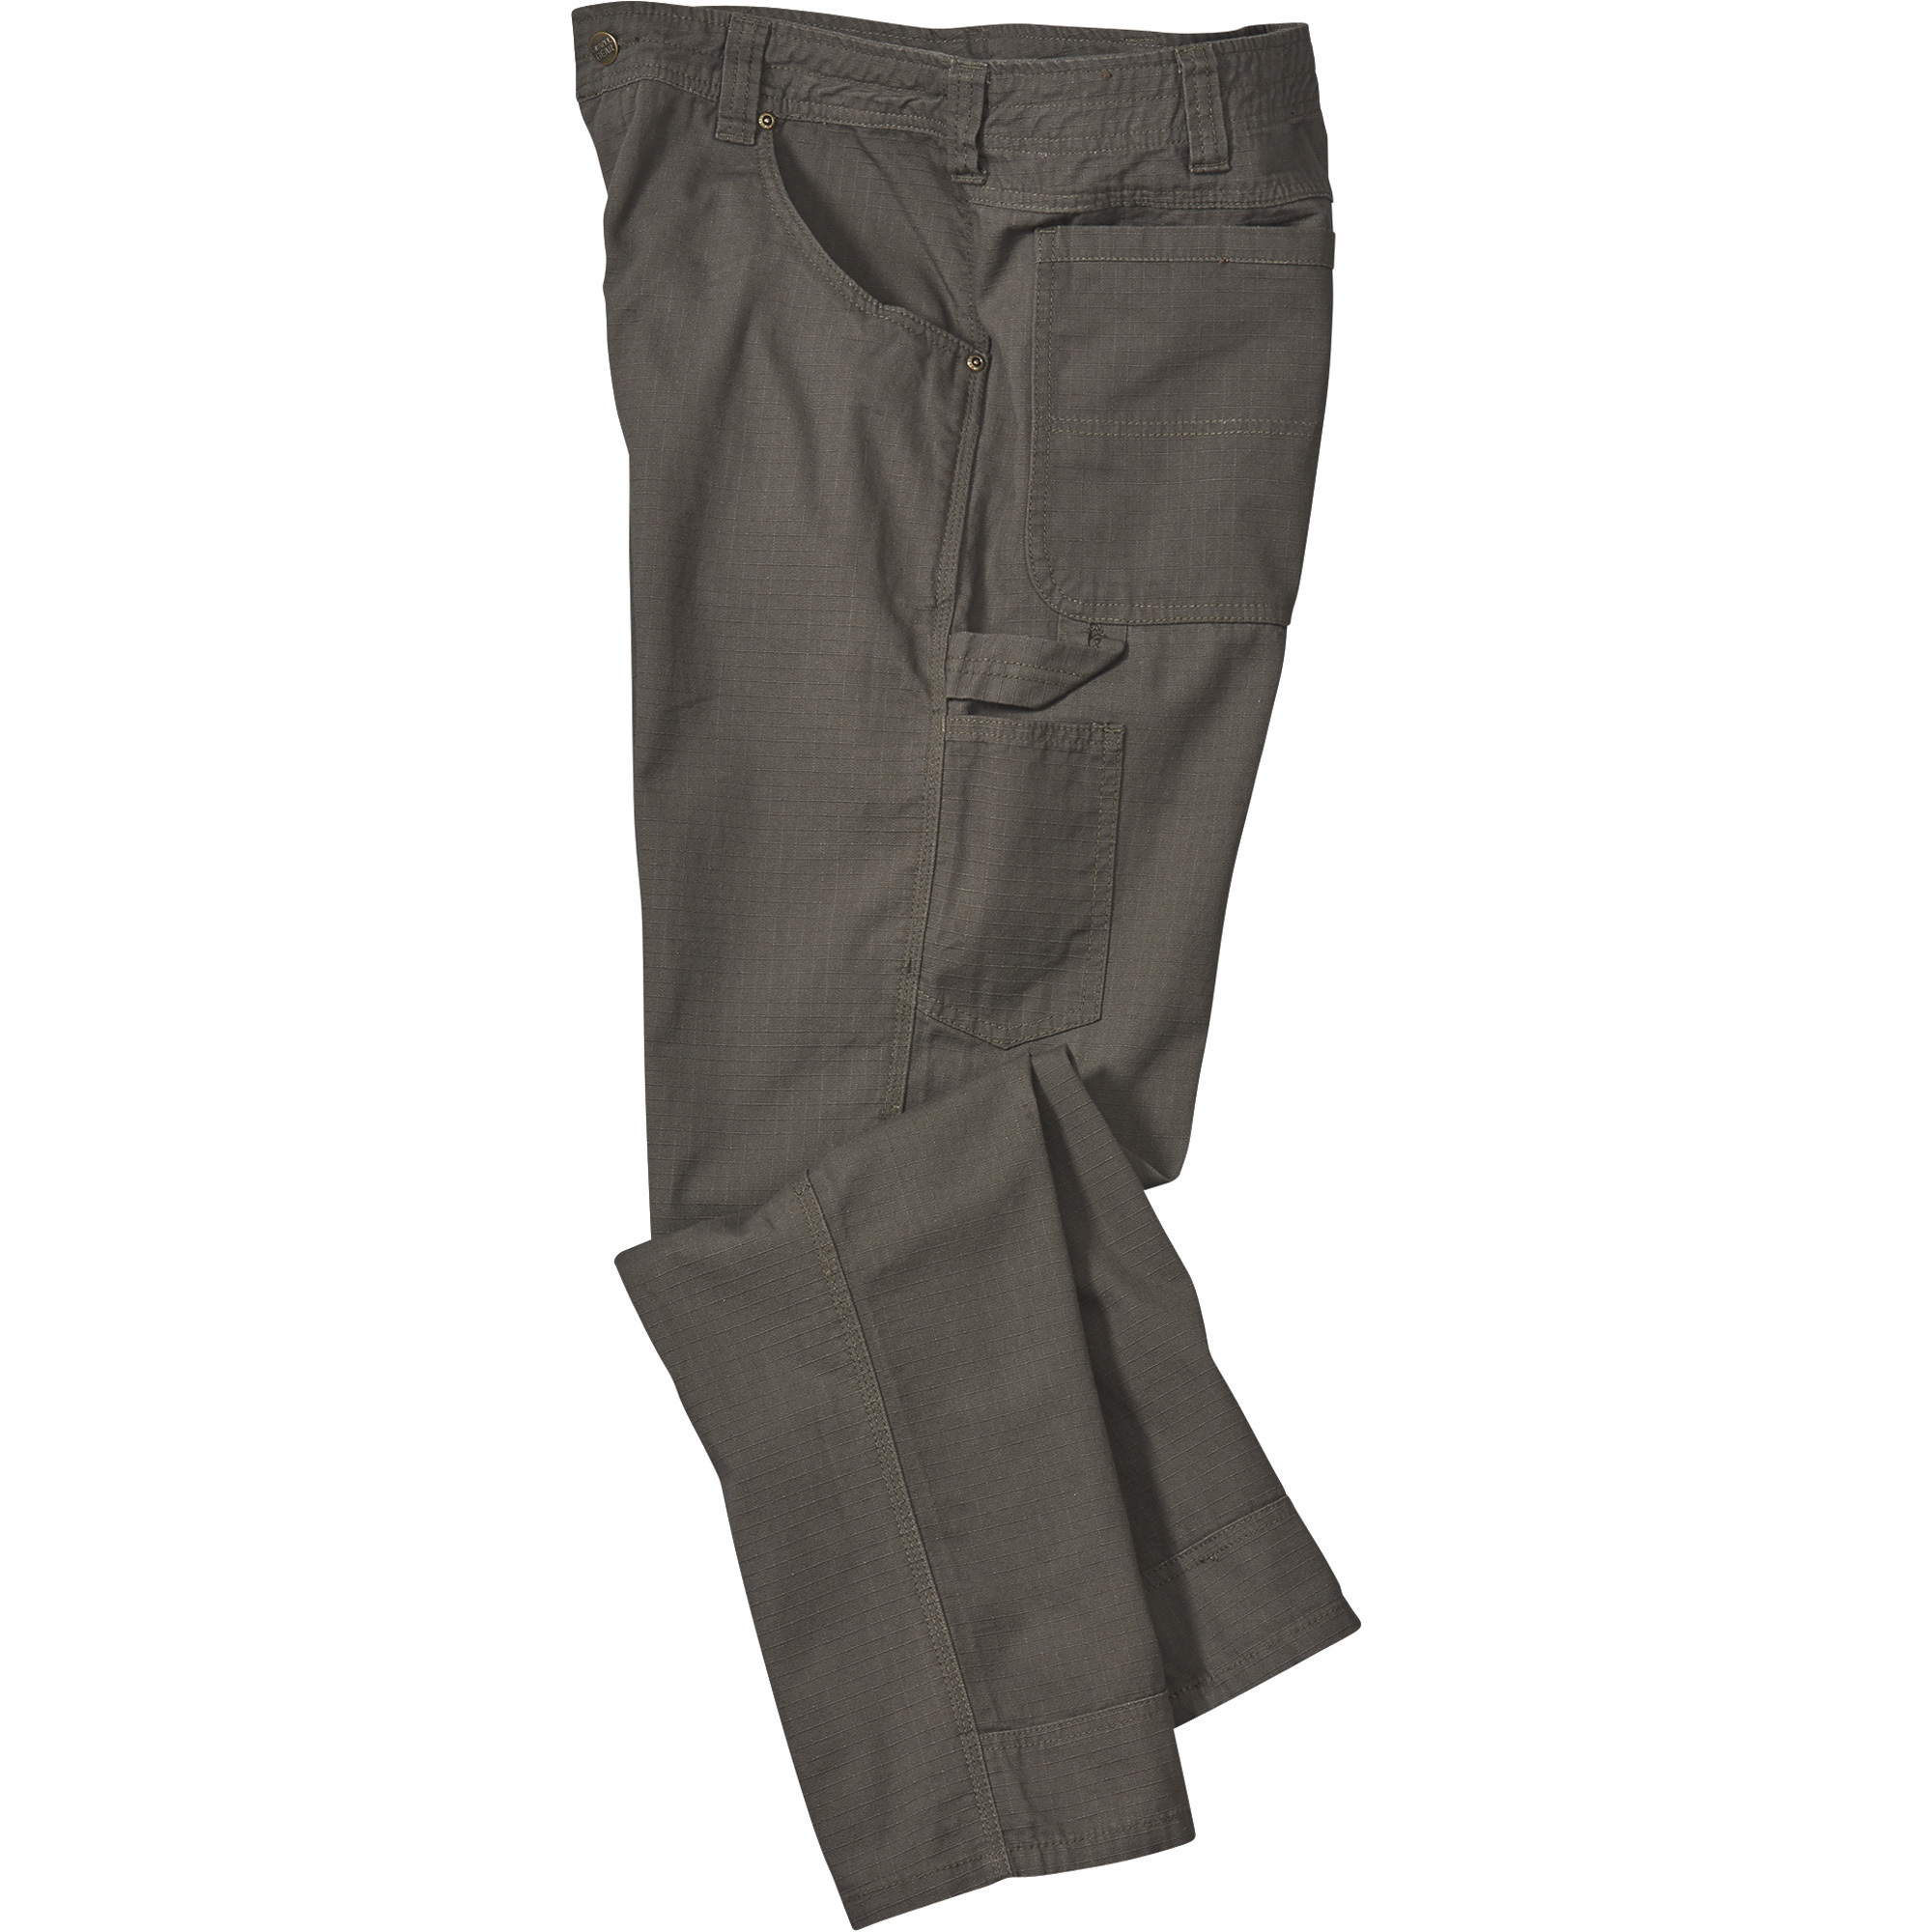 Gravel Gear Men's Cotton Ripstop Carpenter Pants with Teflon Fabric Protector â Moss, 36Inch Waist x 34Inch Inseam